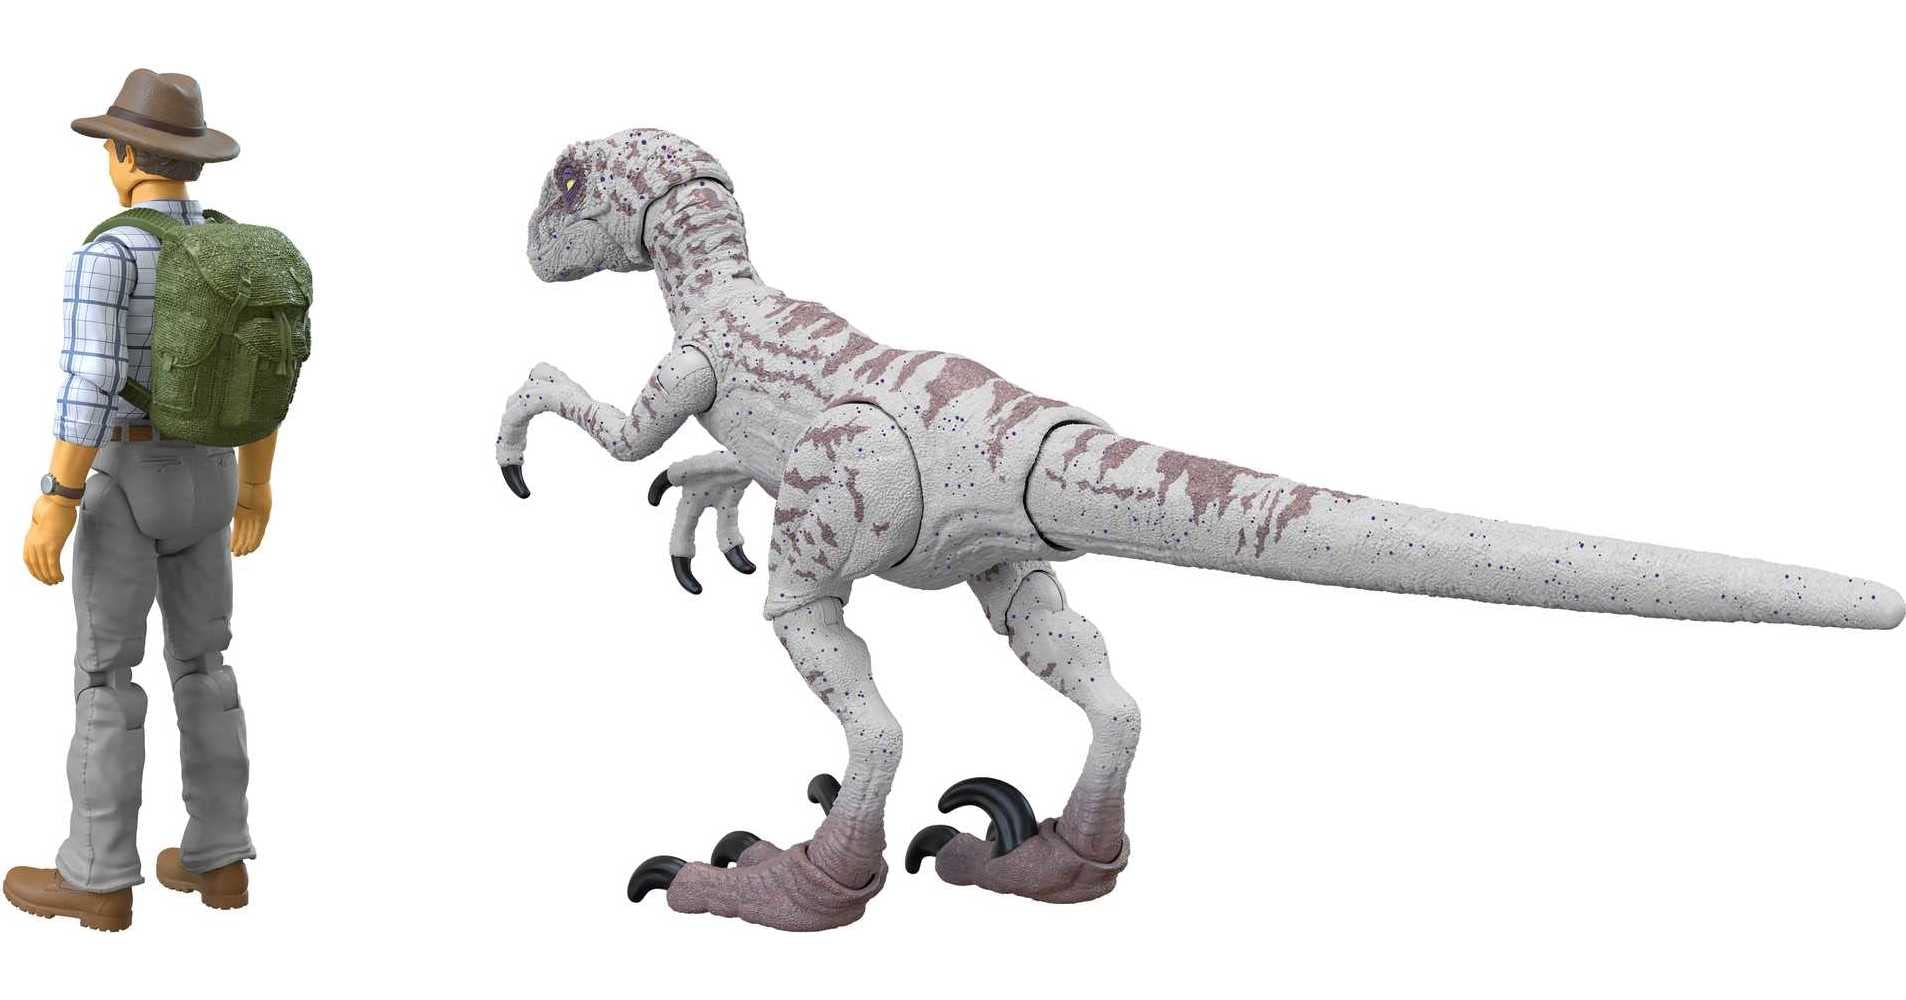 Jurassic World Jurassic Park III Hammond Collection Dr. Alan Grant & Velociraptor Pack, Raptor Egg Accessories (Amazon Exclusive)